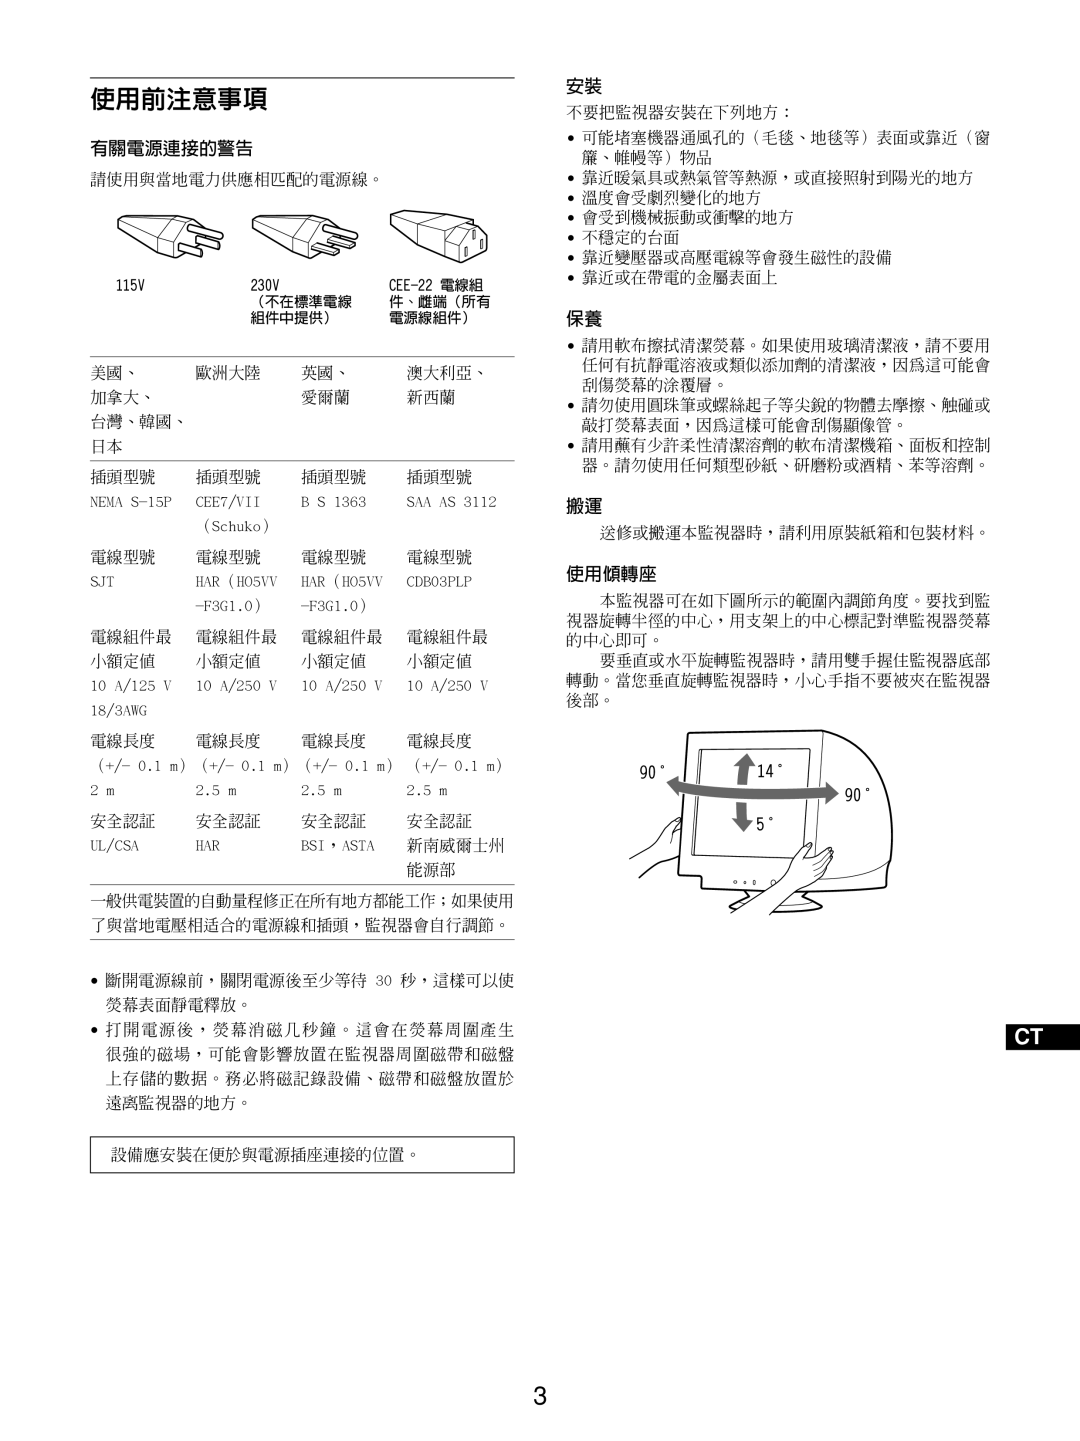 Sony GDM-5510 operating instructions 使用前注意事項, 有關電源連接的警告, 使用傾轉座 